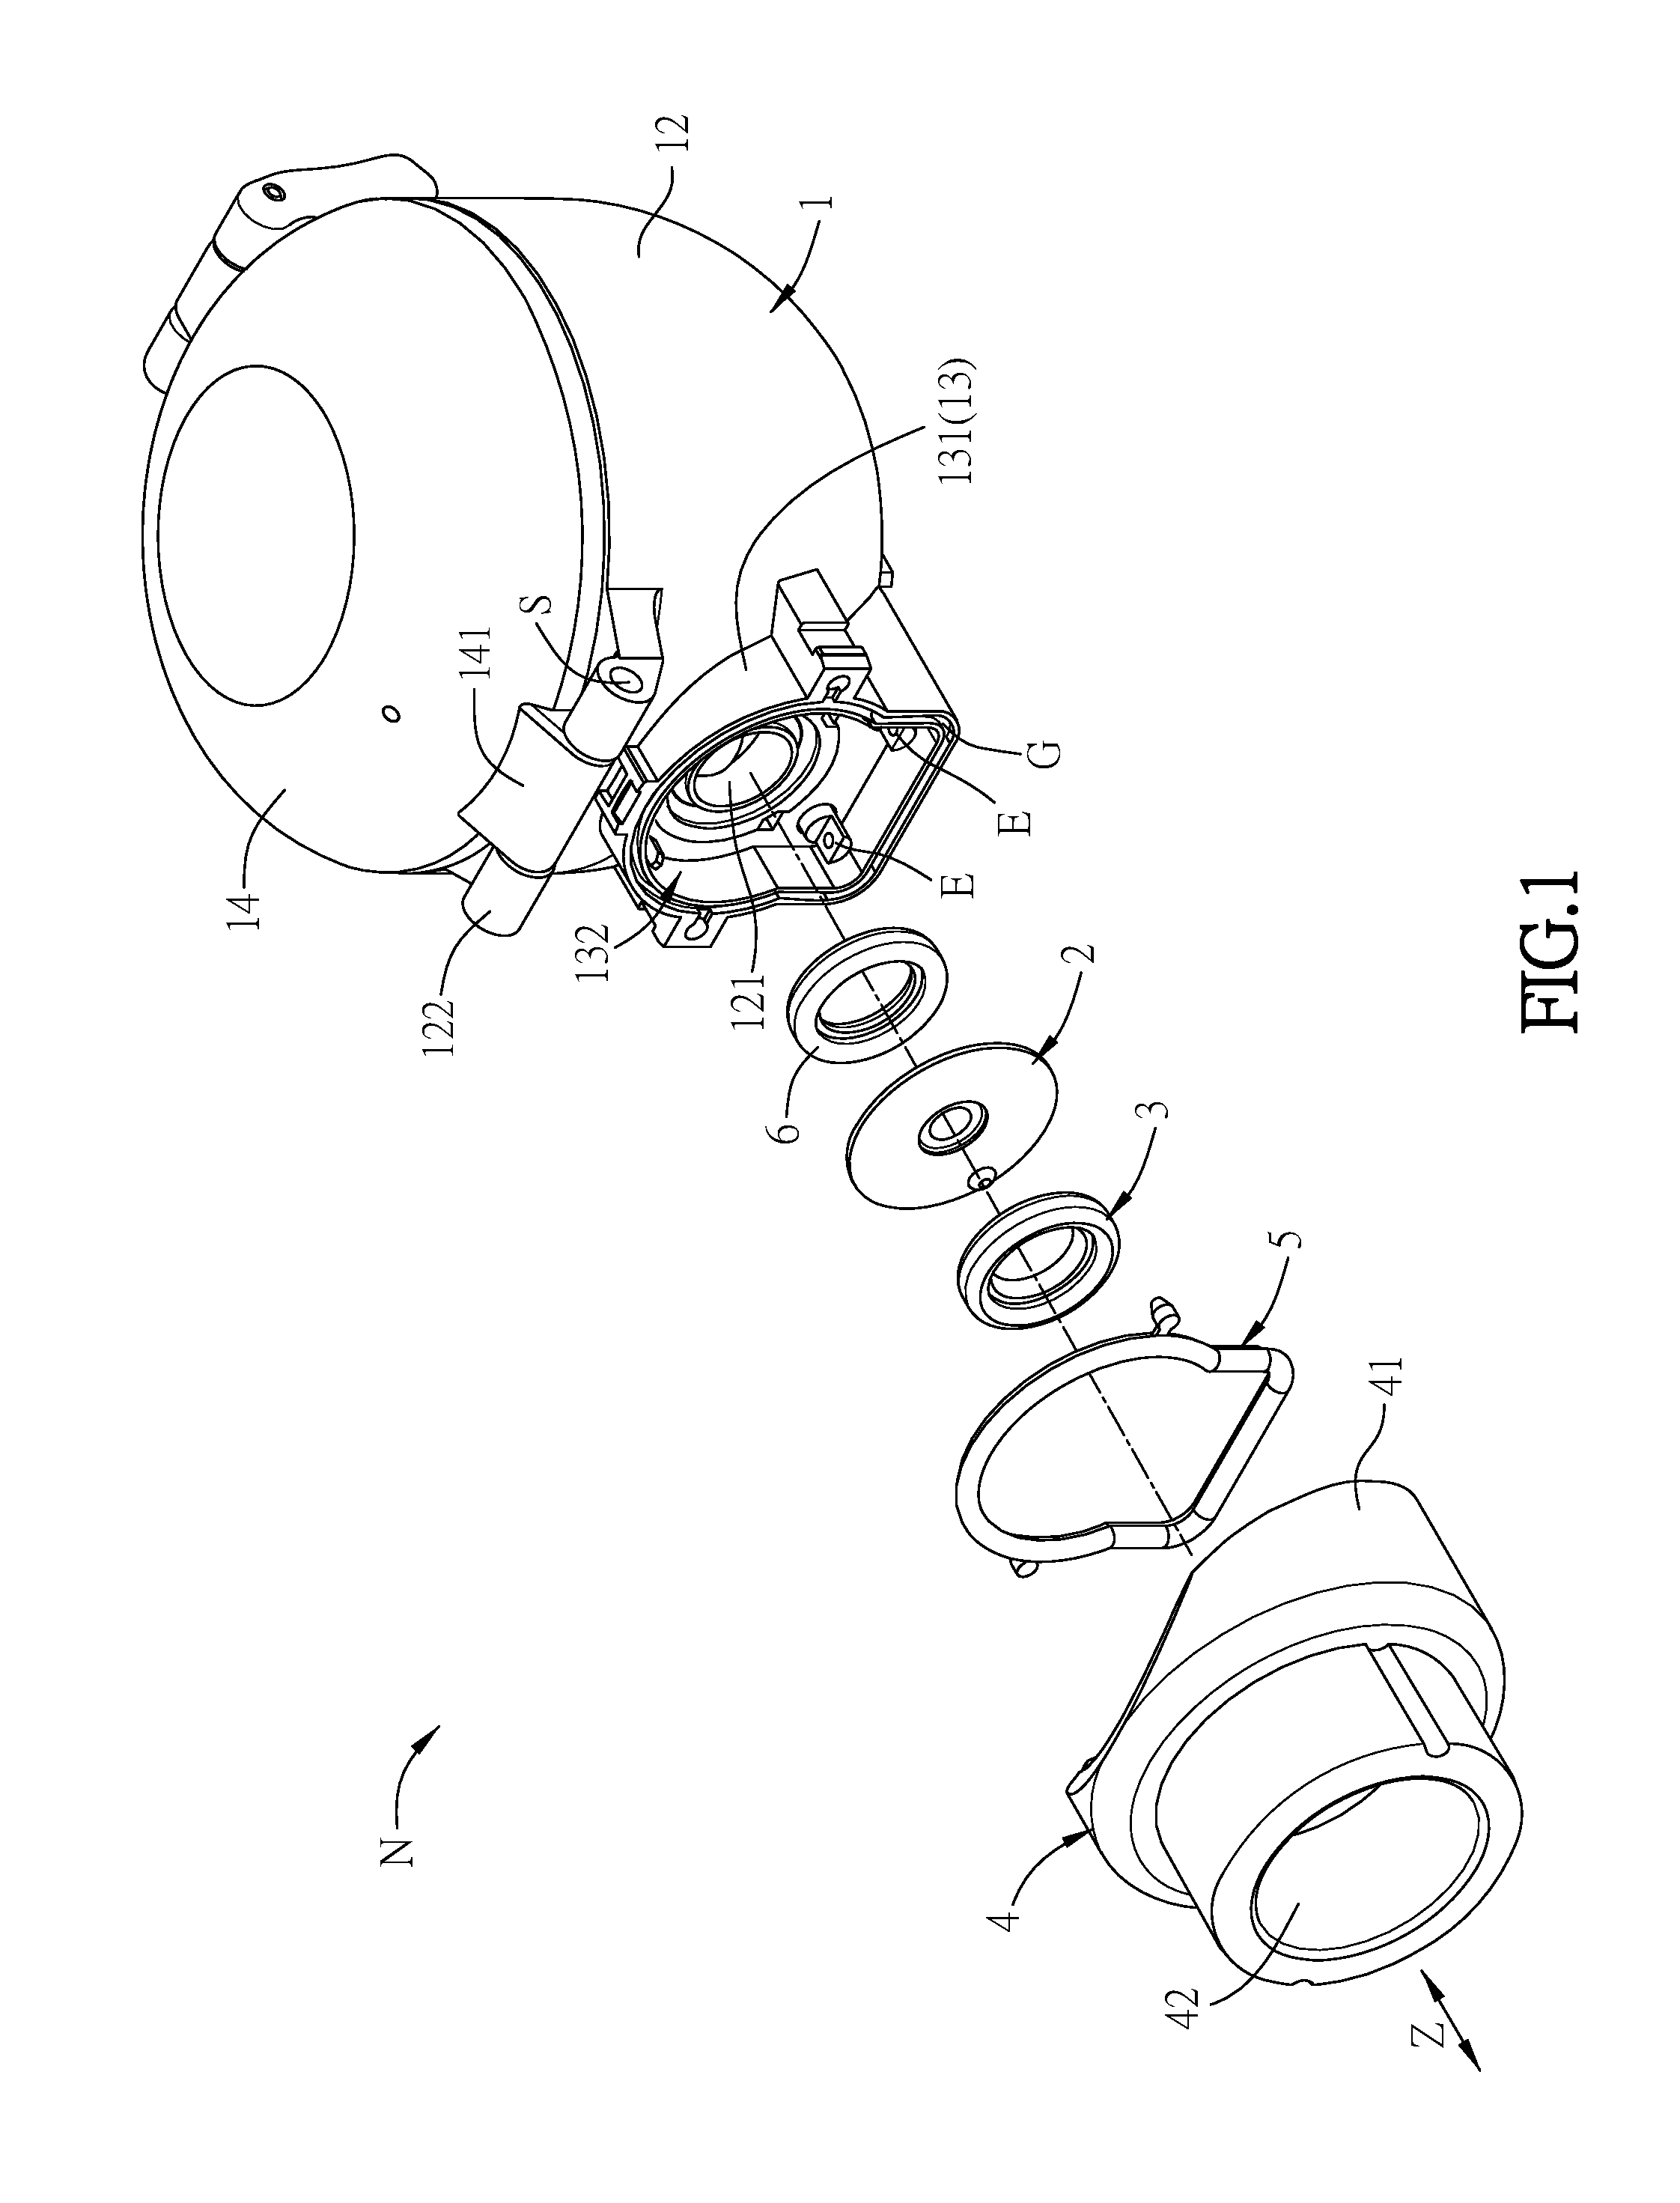 Nebulizing device and nebulizer